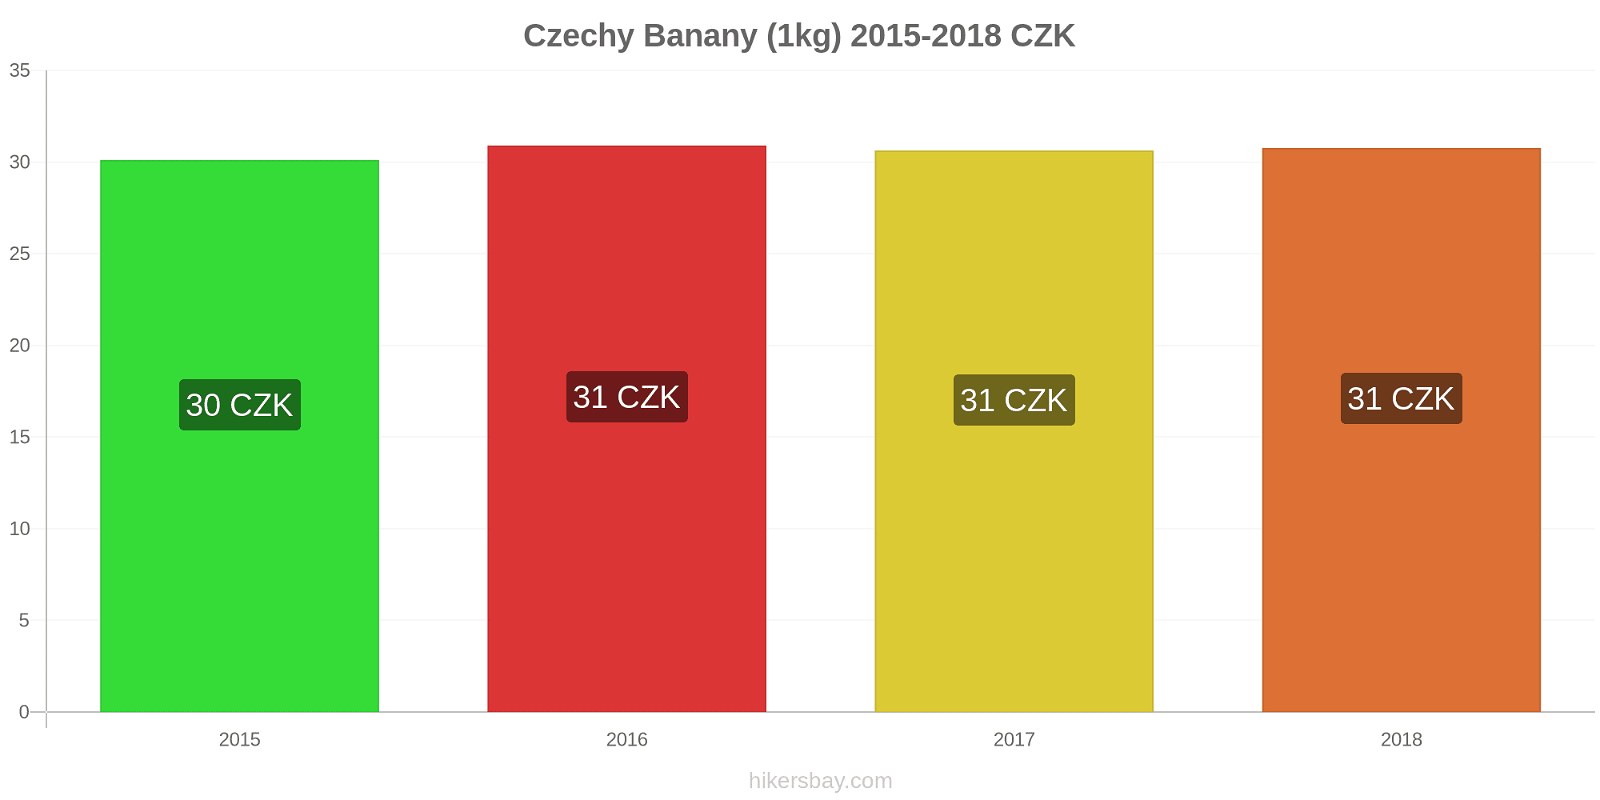 Czechy zmiany cen Banany (1kg) hikersbay.com